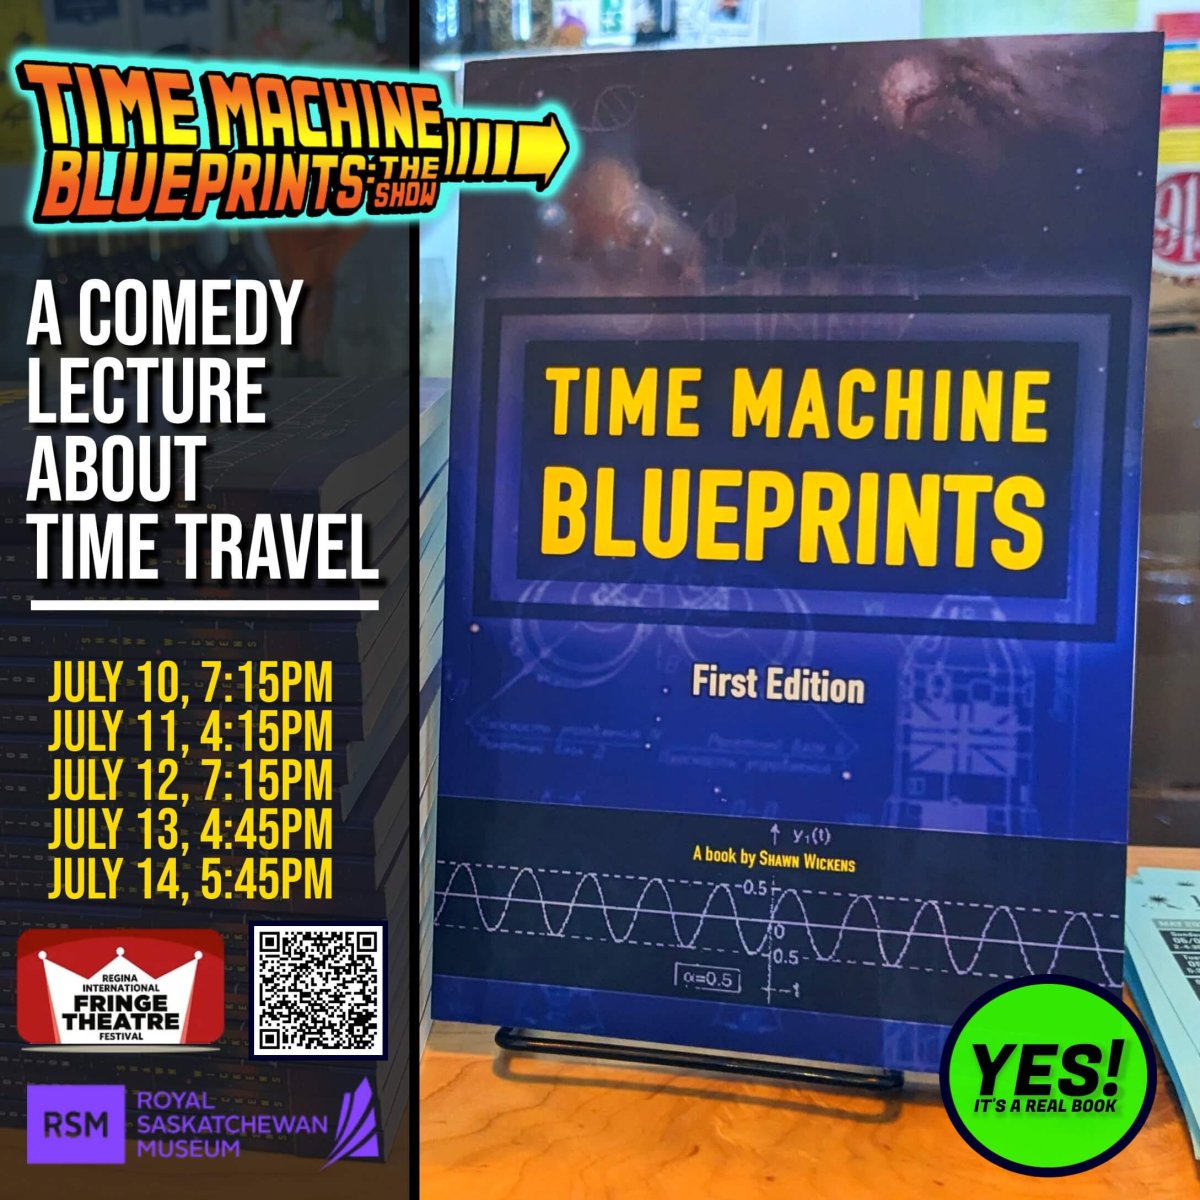 Time Machine Blueprints: The Show - image